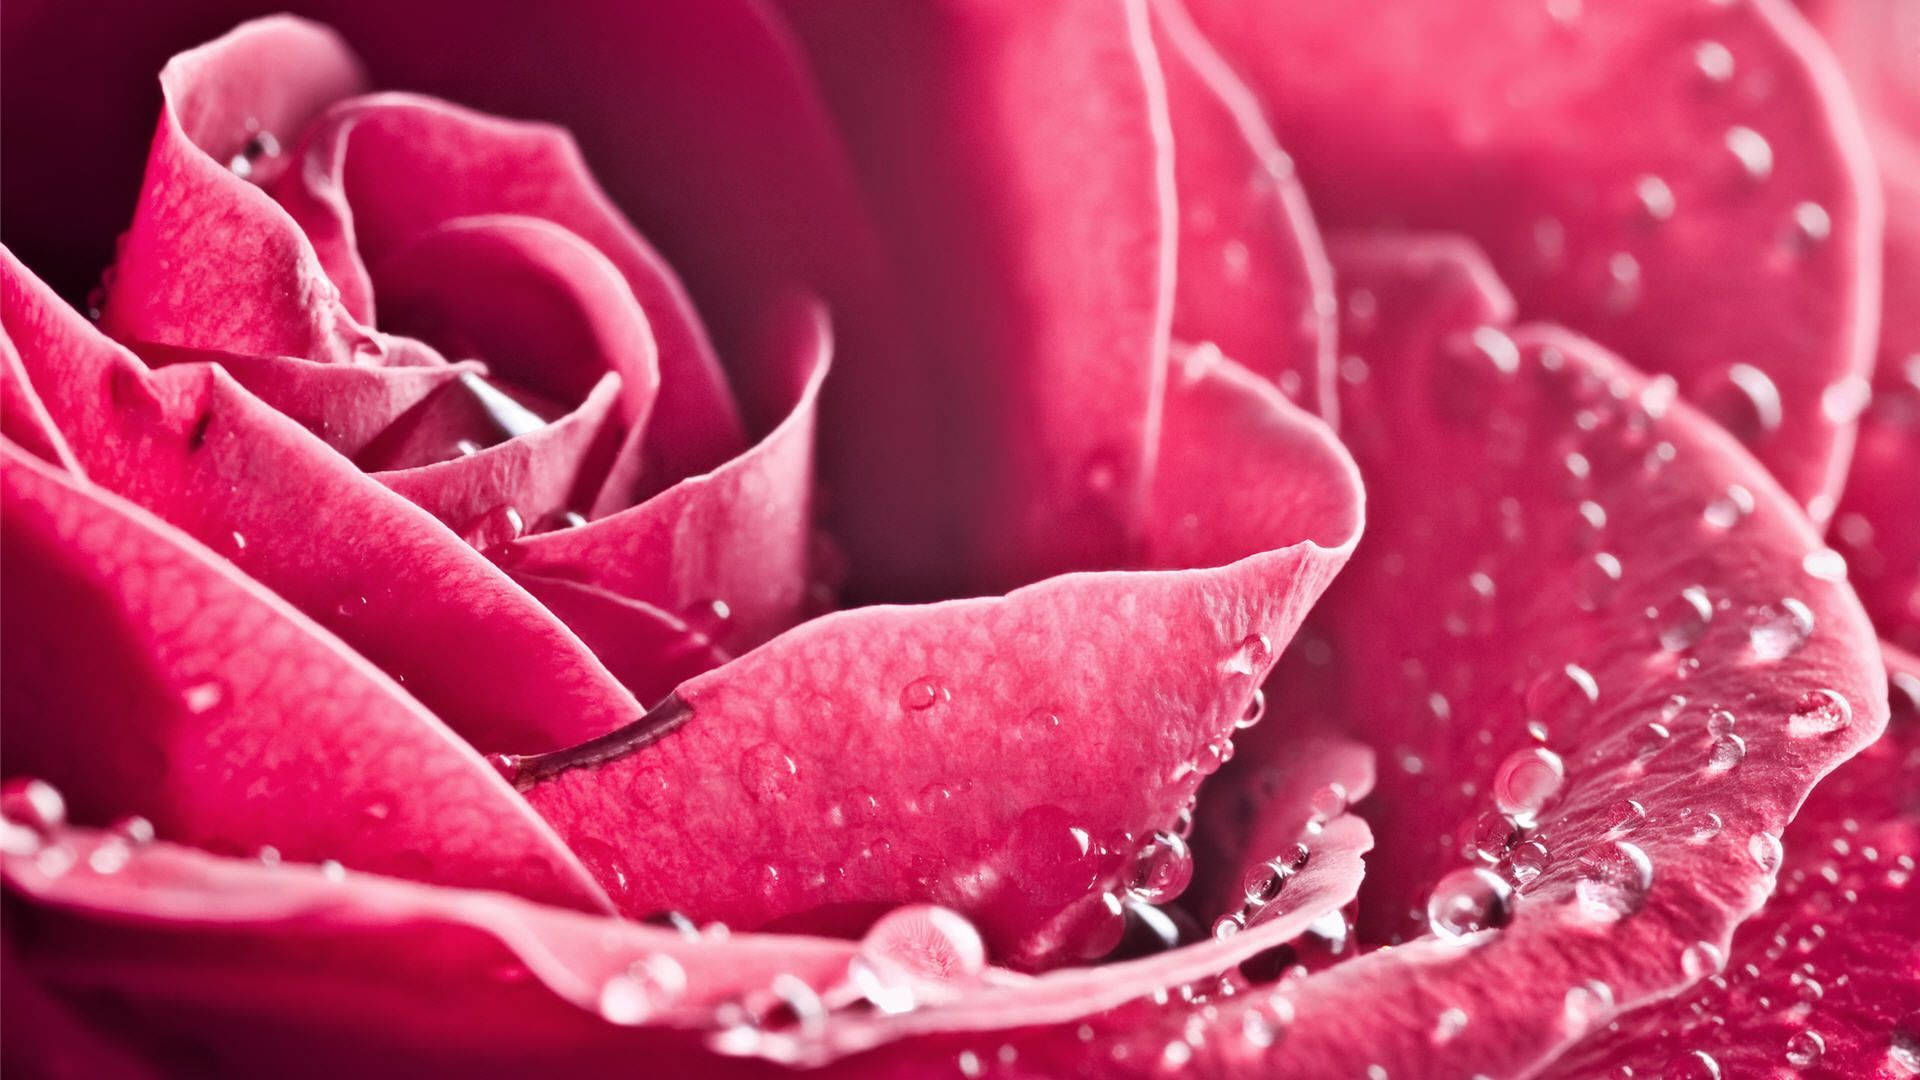 Vibrant Hot Pink Rose Bathed In Droplets Background